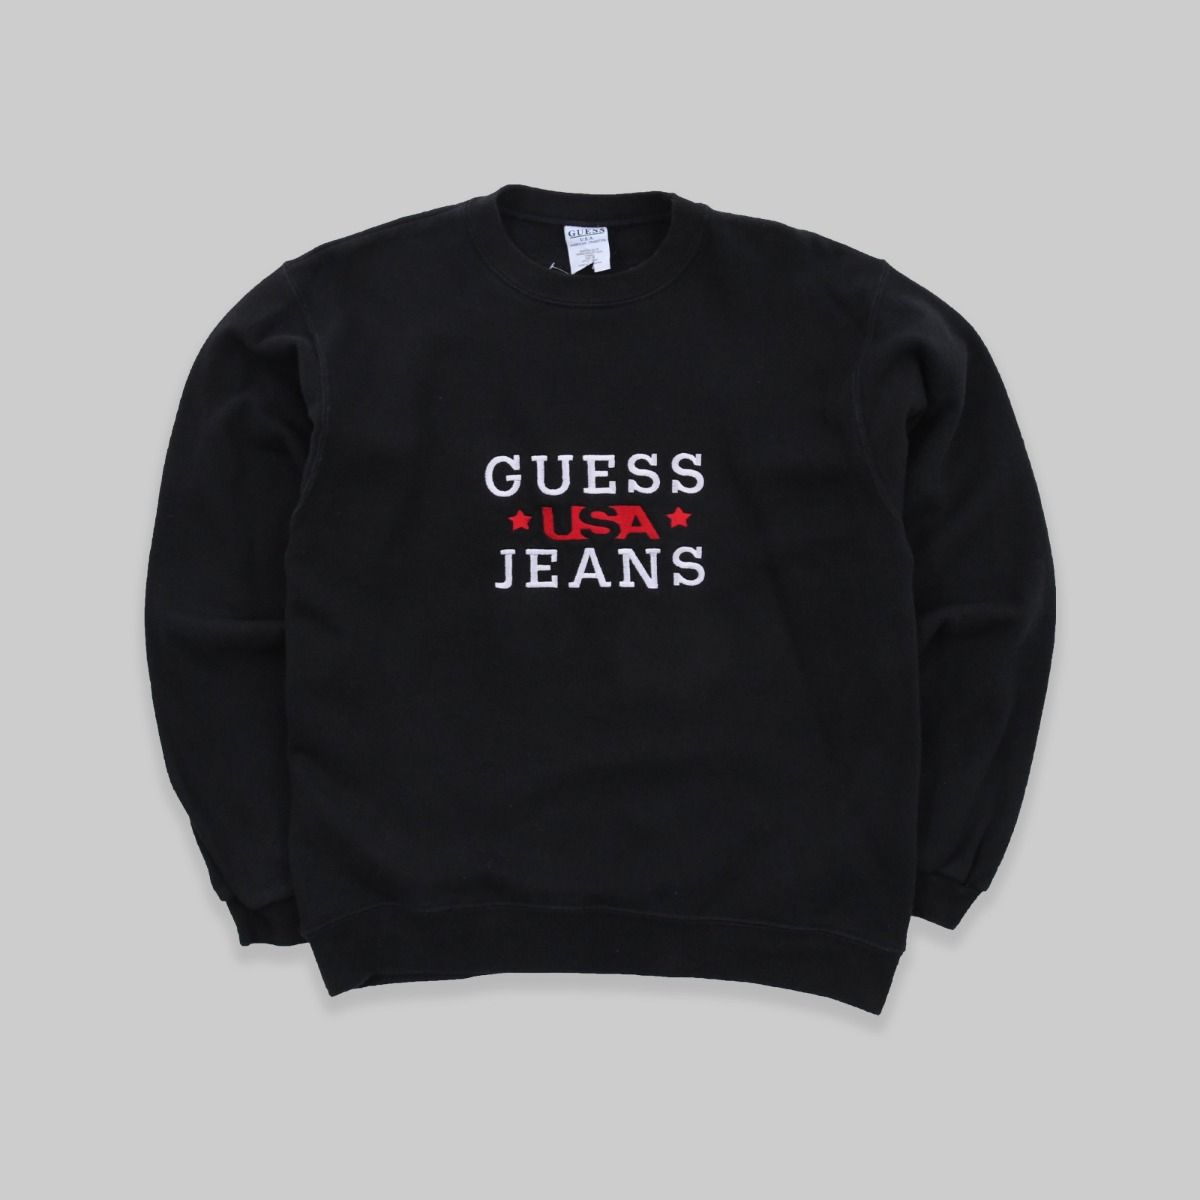 Guess 1990s Sweatshirt